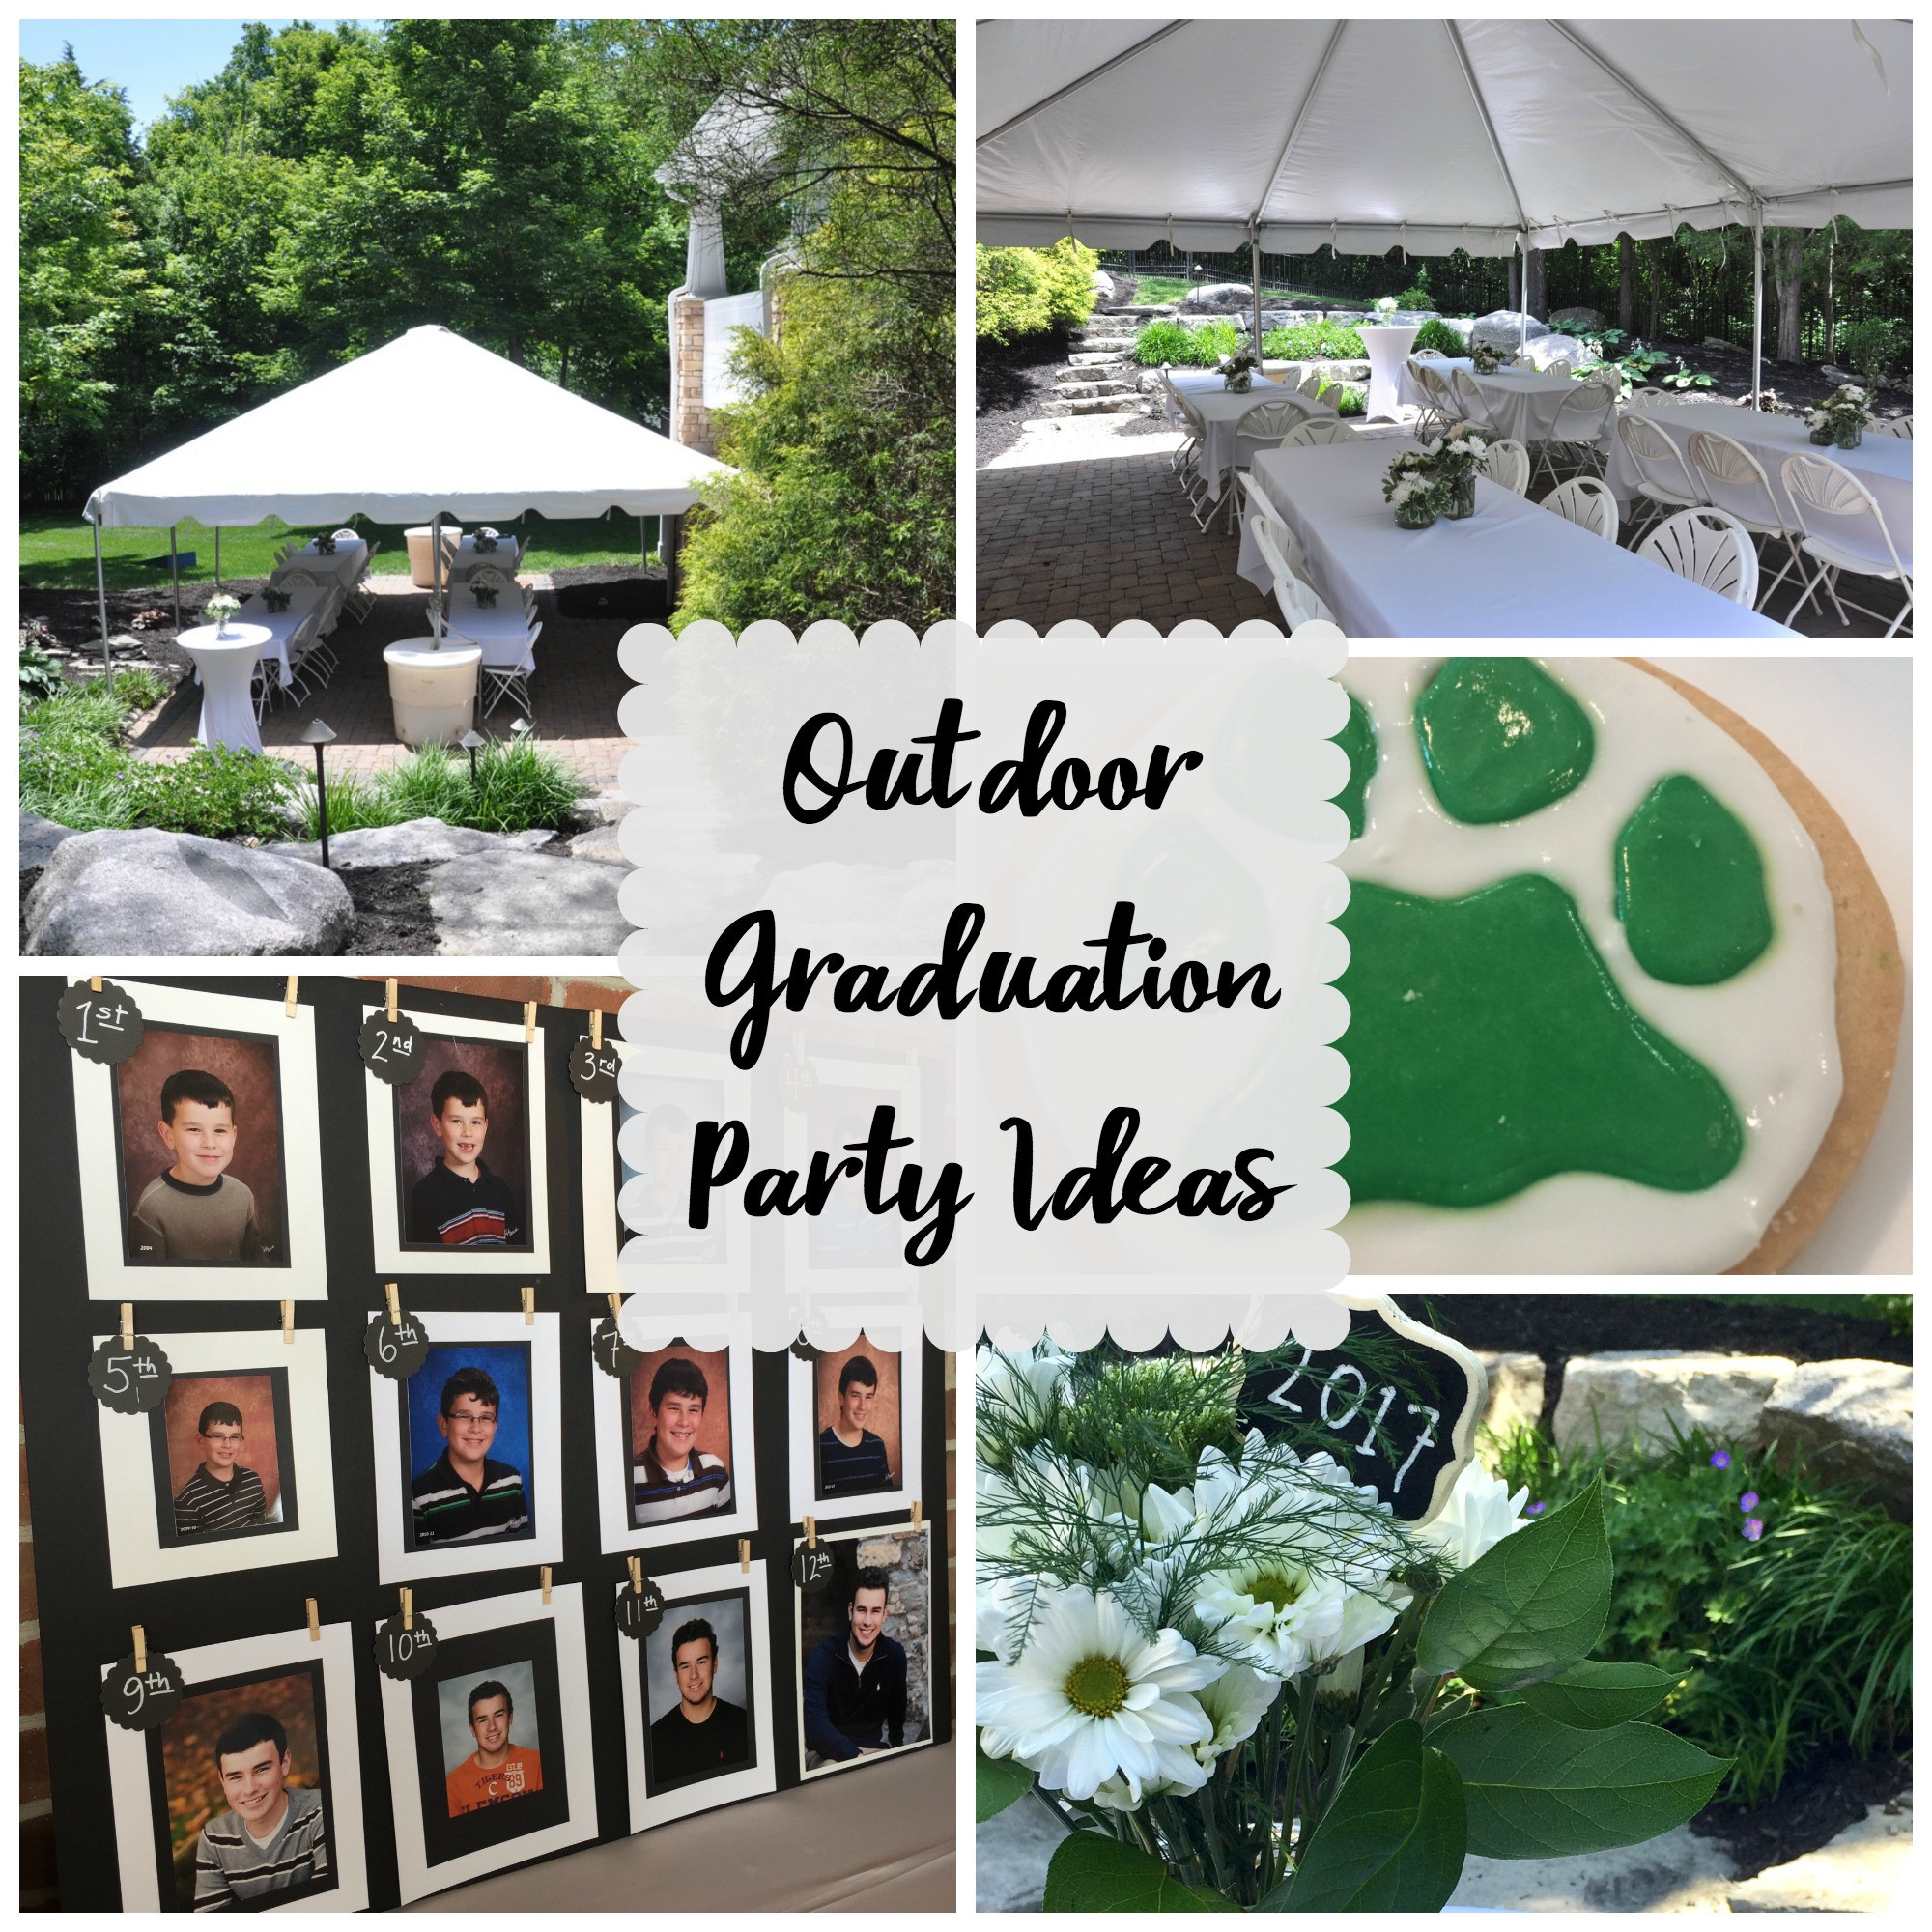 Pinterest Backyard Graduation Party Ideas
 Outdoor Graduation Party Evolution of Style